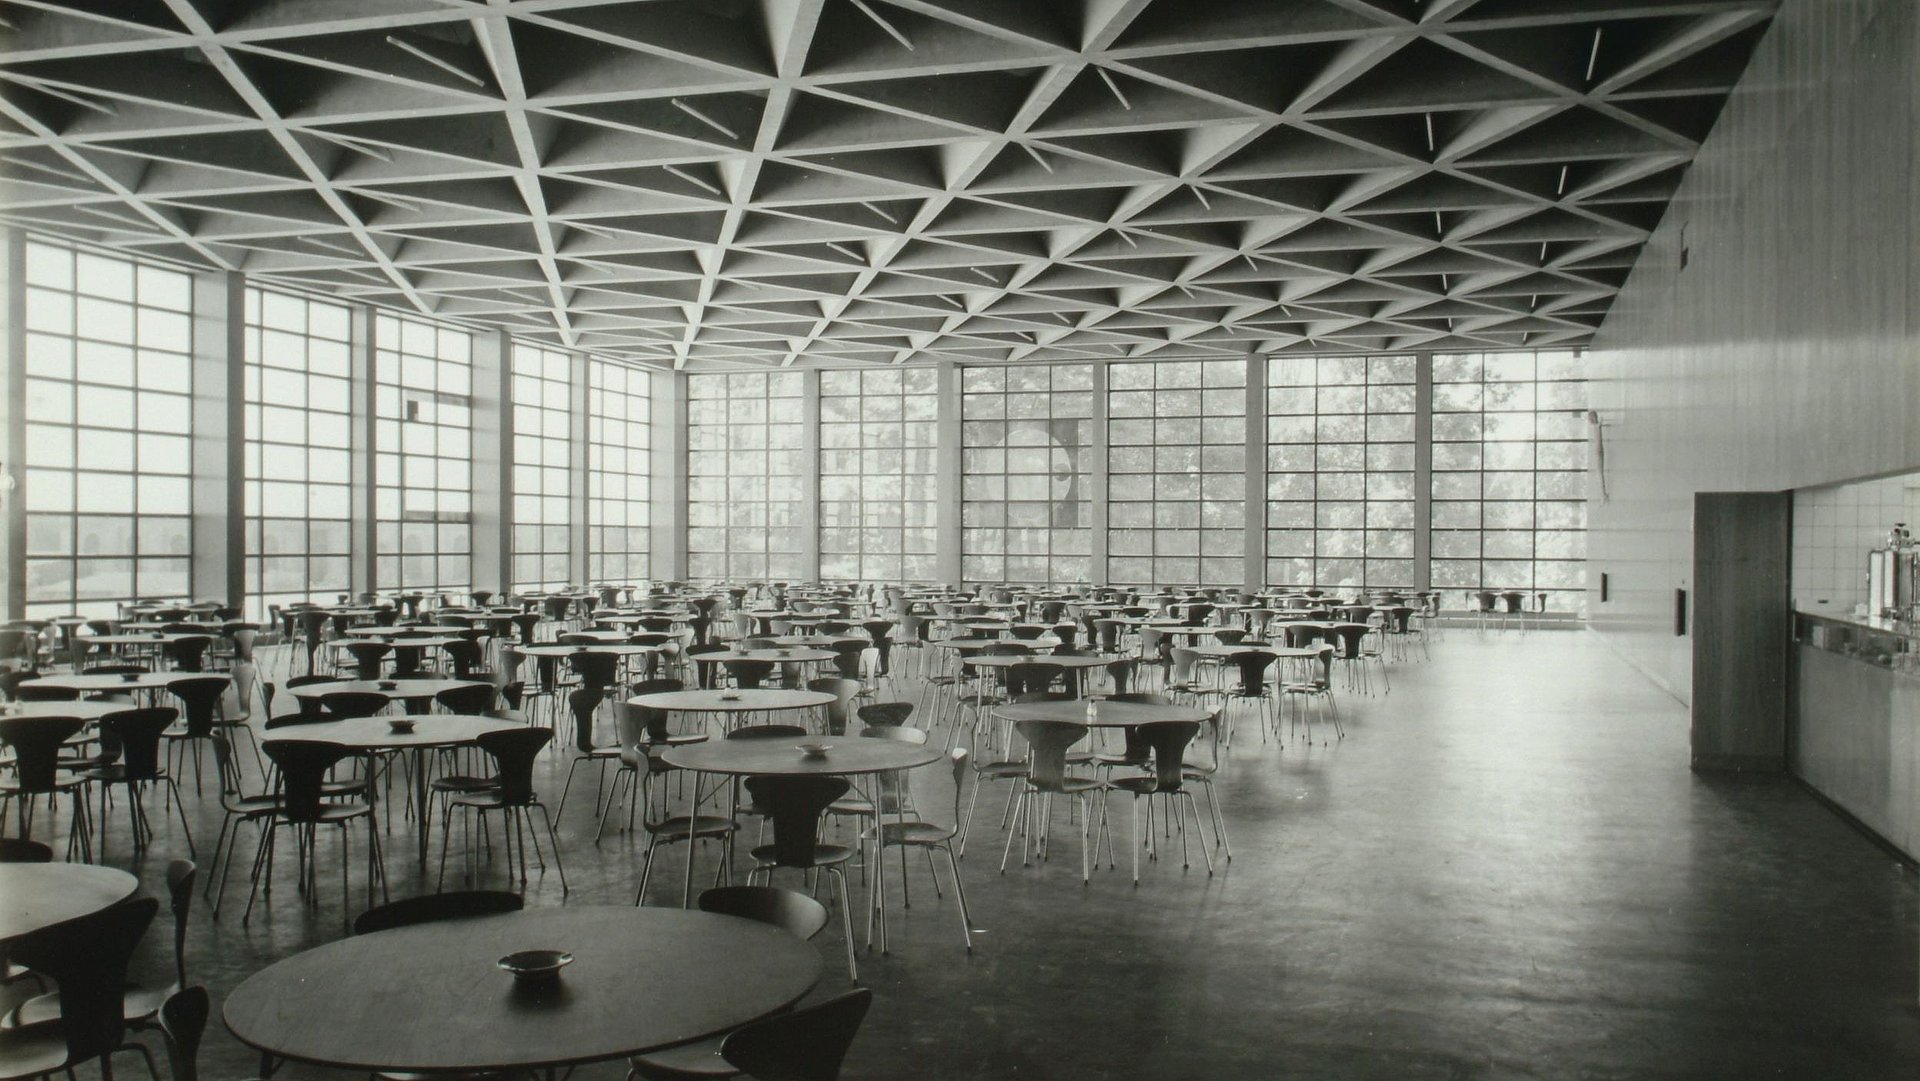 Großer Speisesaal der Mensa, ca. 1959.